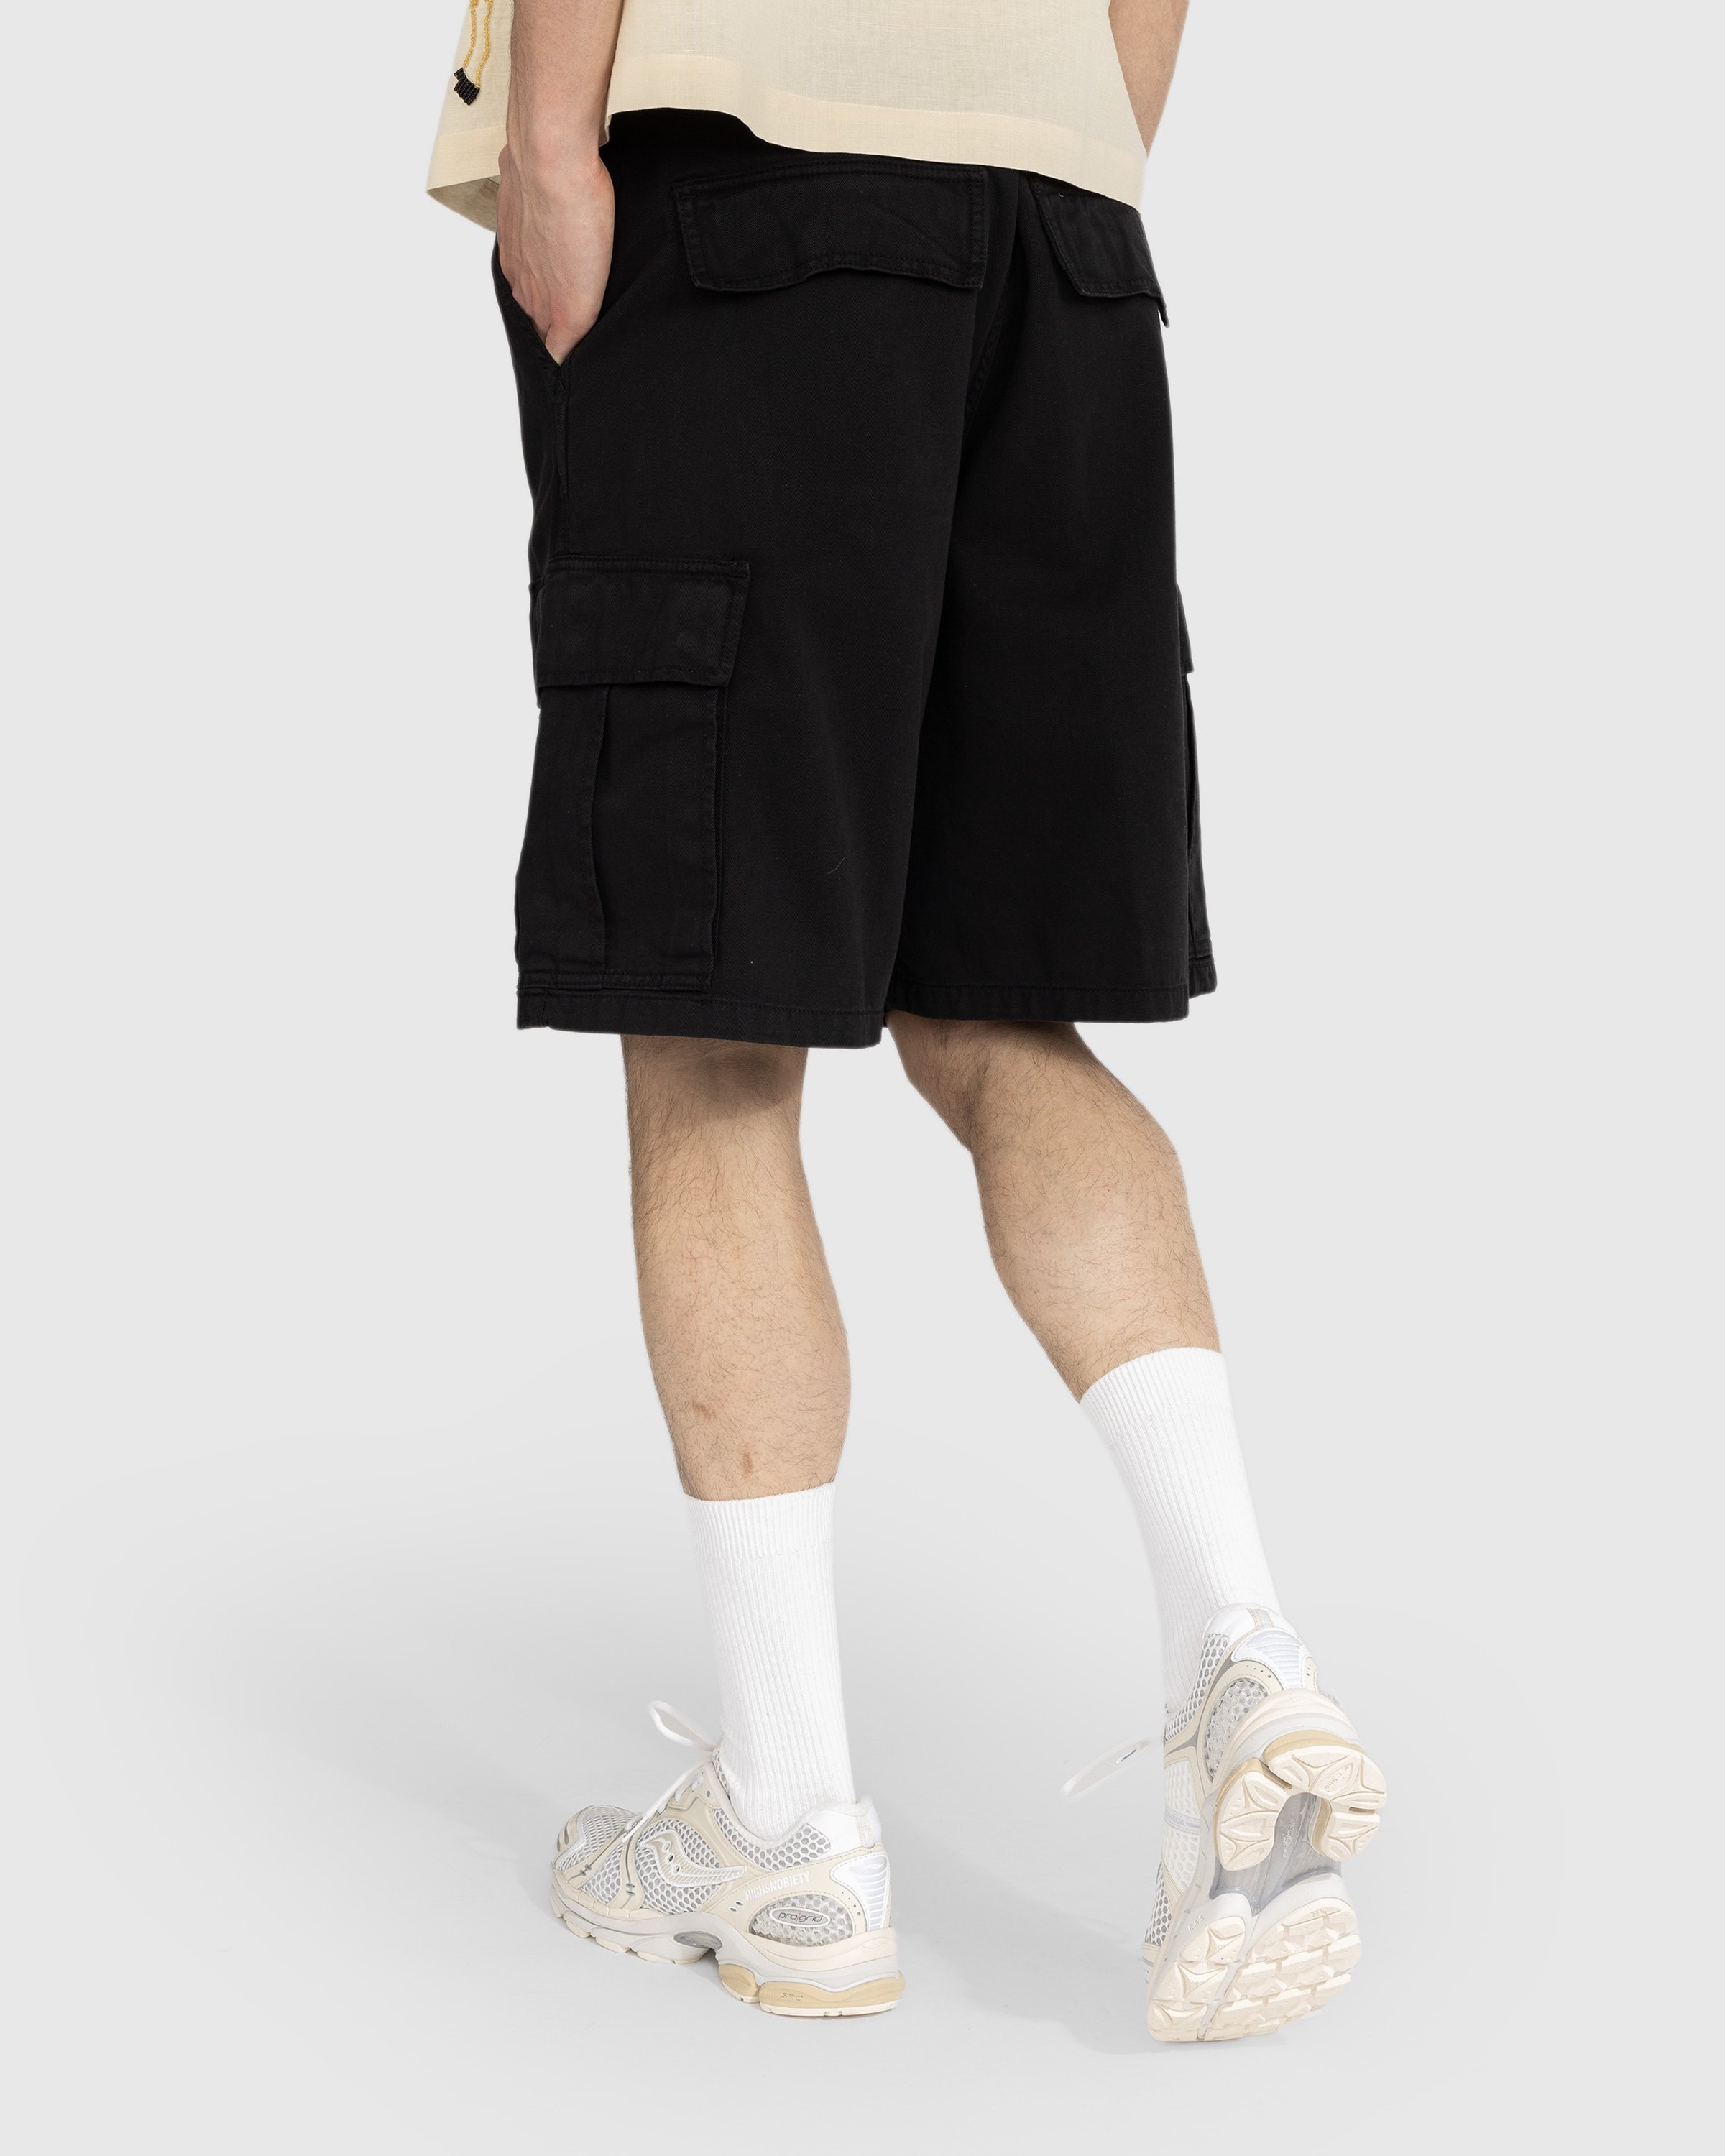 Carhartt WIP – Cole Cargo Short Black - Shorts - Black - Image 3